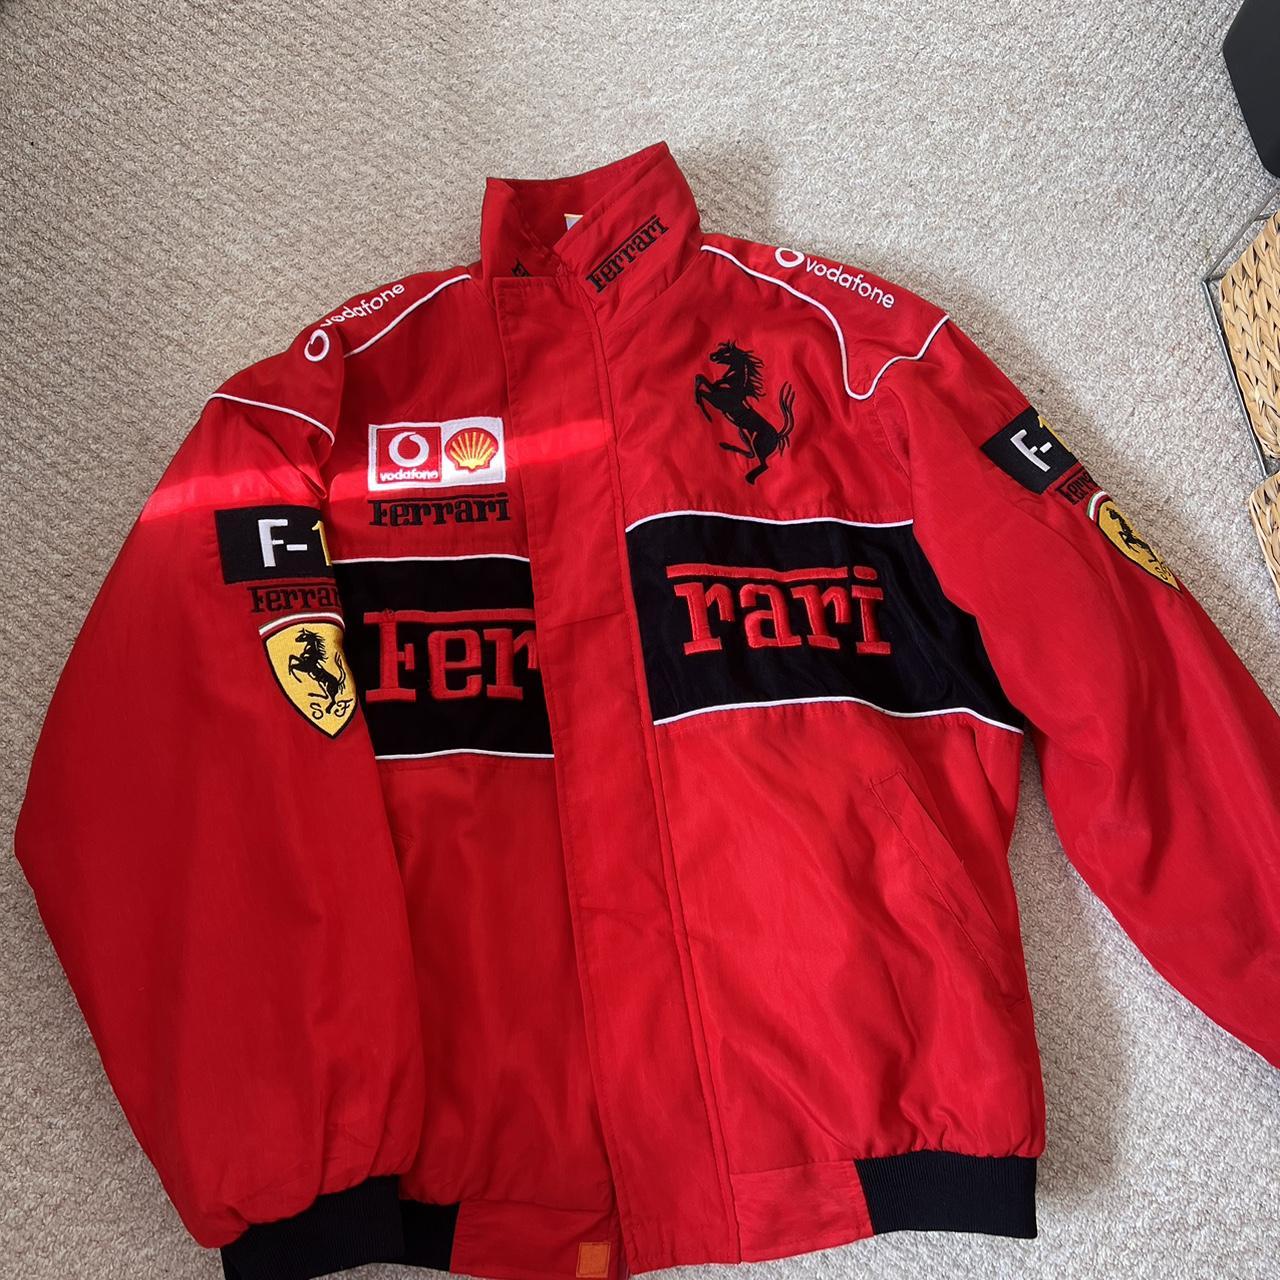 Real Vintage F1 ferrari racing coat - not the ones... - Depop